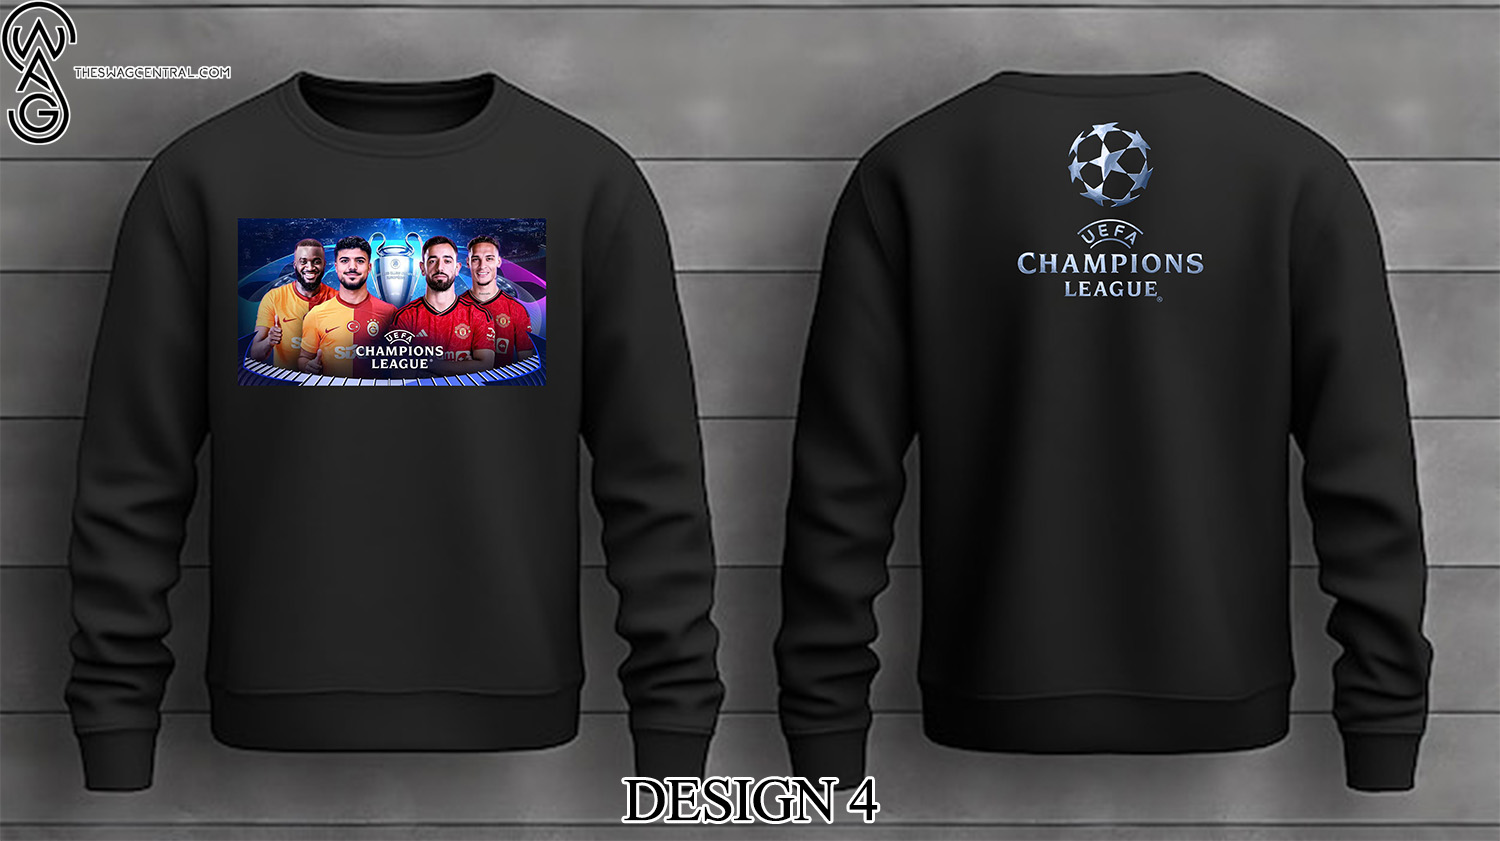 UEFA Champions League Galatasaray vs Manchester United Shirt